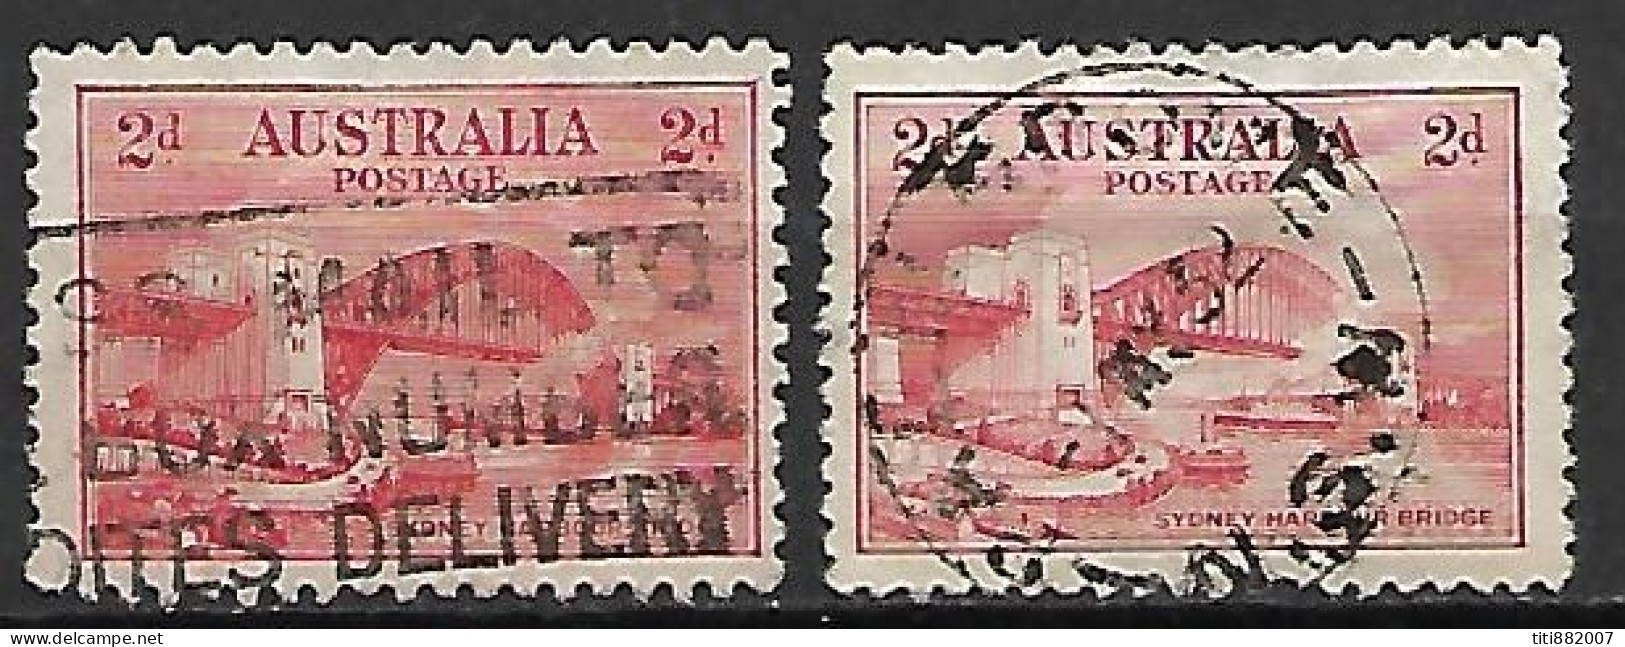 AUSTRALIE   -  1932.   Y&T N° 89  &  92 Oblitérés.  Pont - Used Stamps